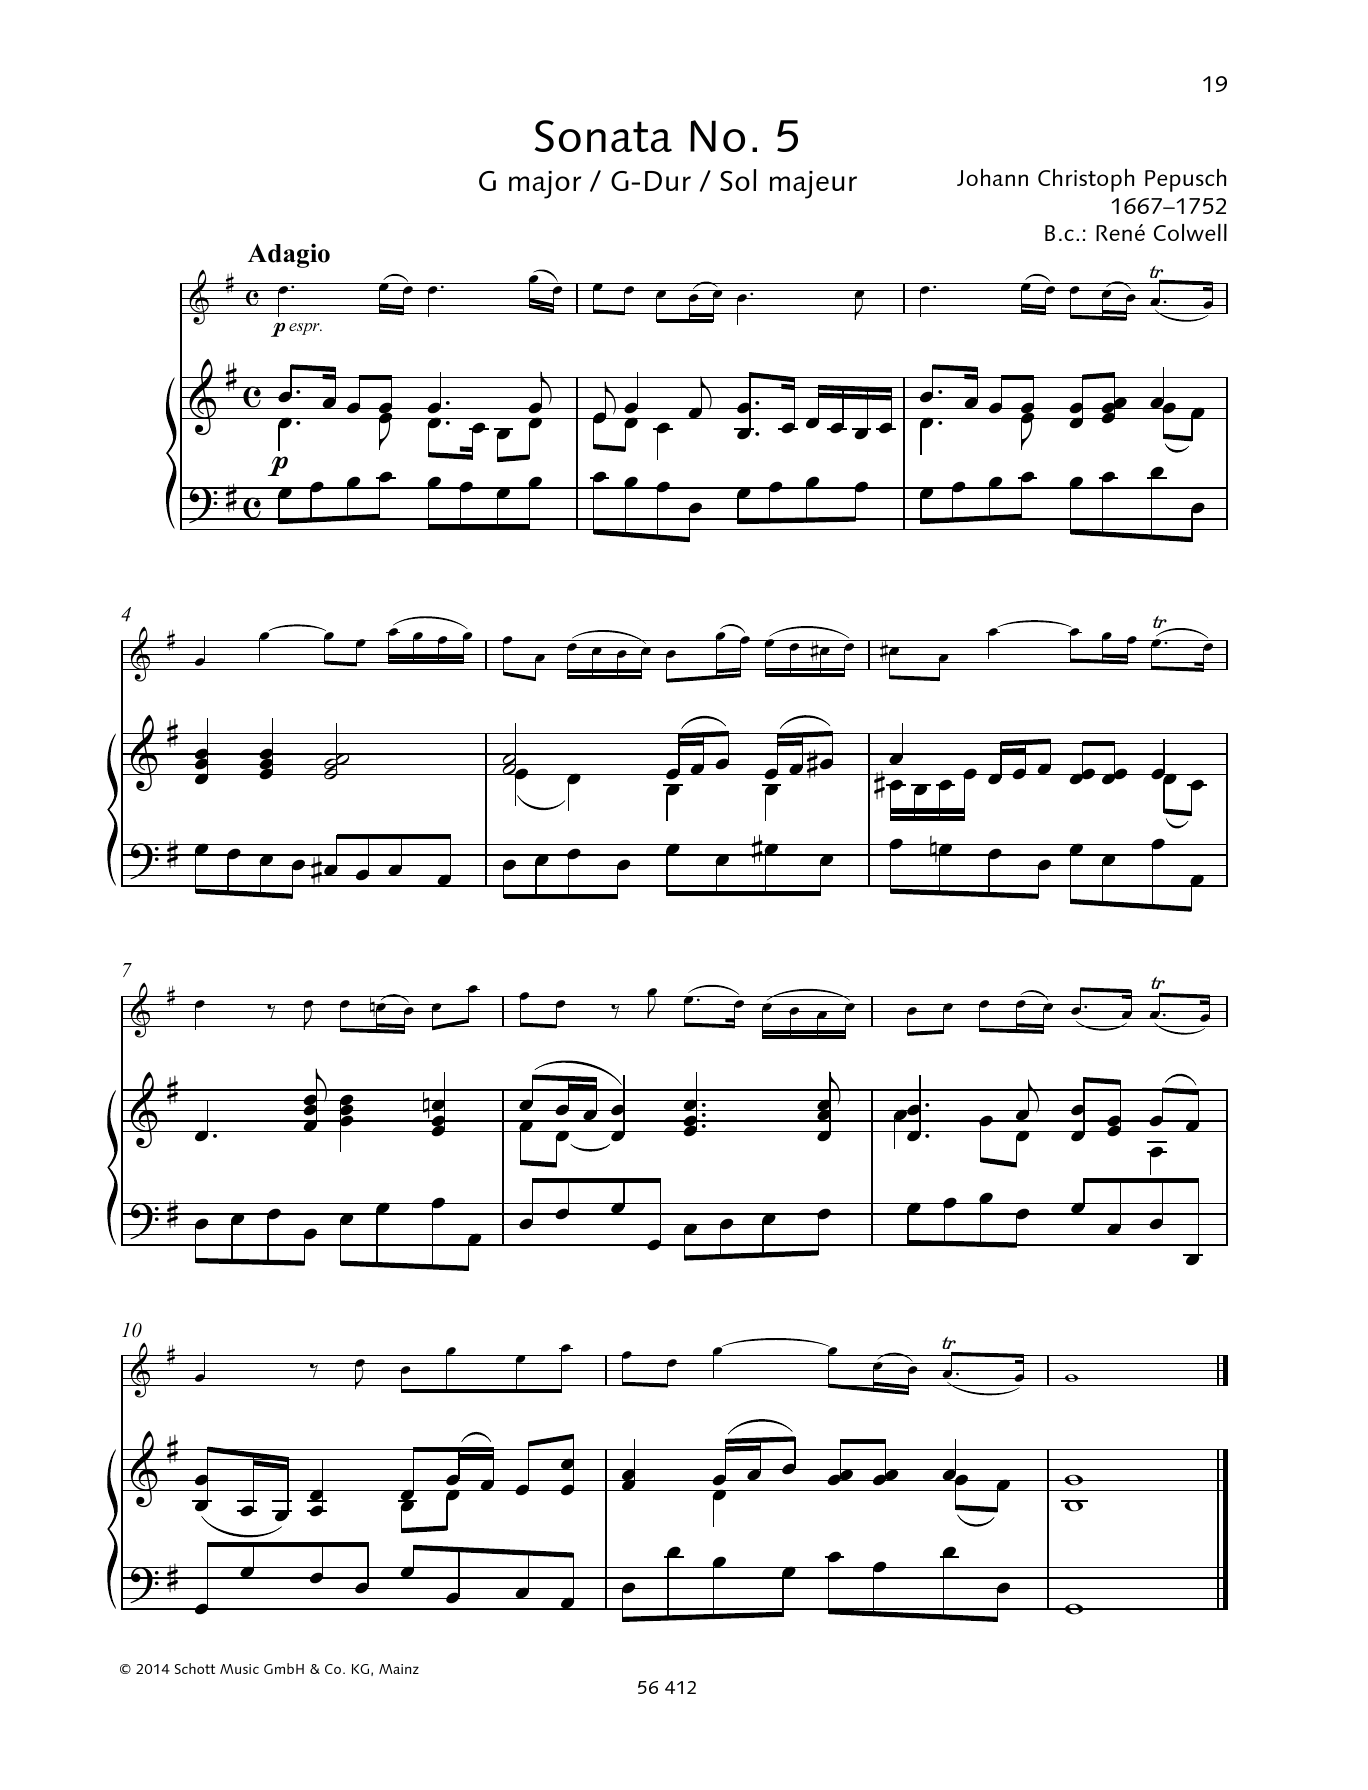 Baldassare Galuppi Sonata No. 5 G major Sheet Music Notes & Chords for String Solo - Download or Print PDF